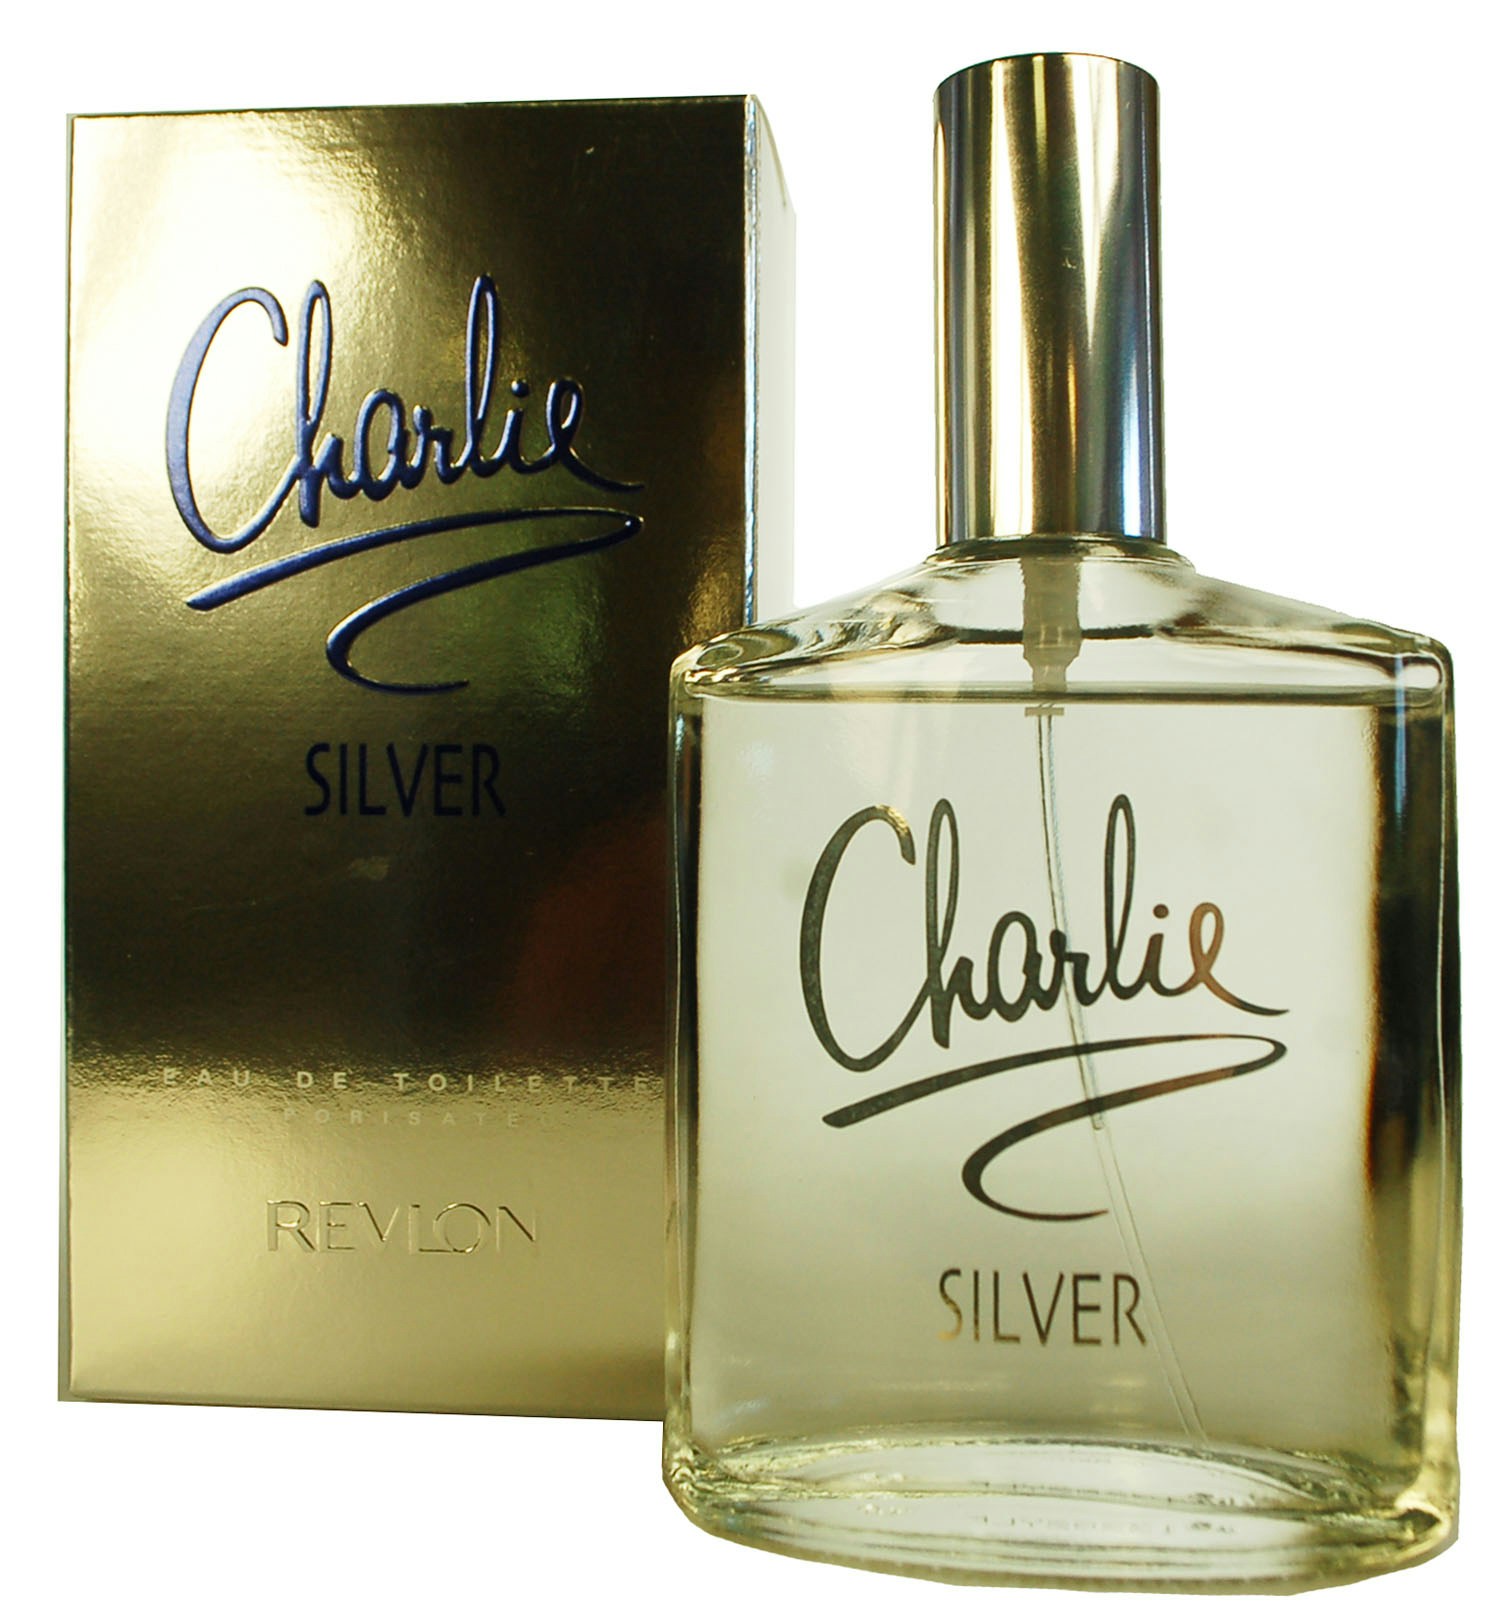 Photos - Women's Fragrance Revlon Charlie Silver Eau De Toilette 100ml Spray 